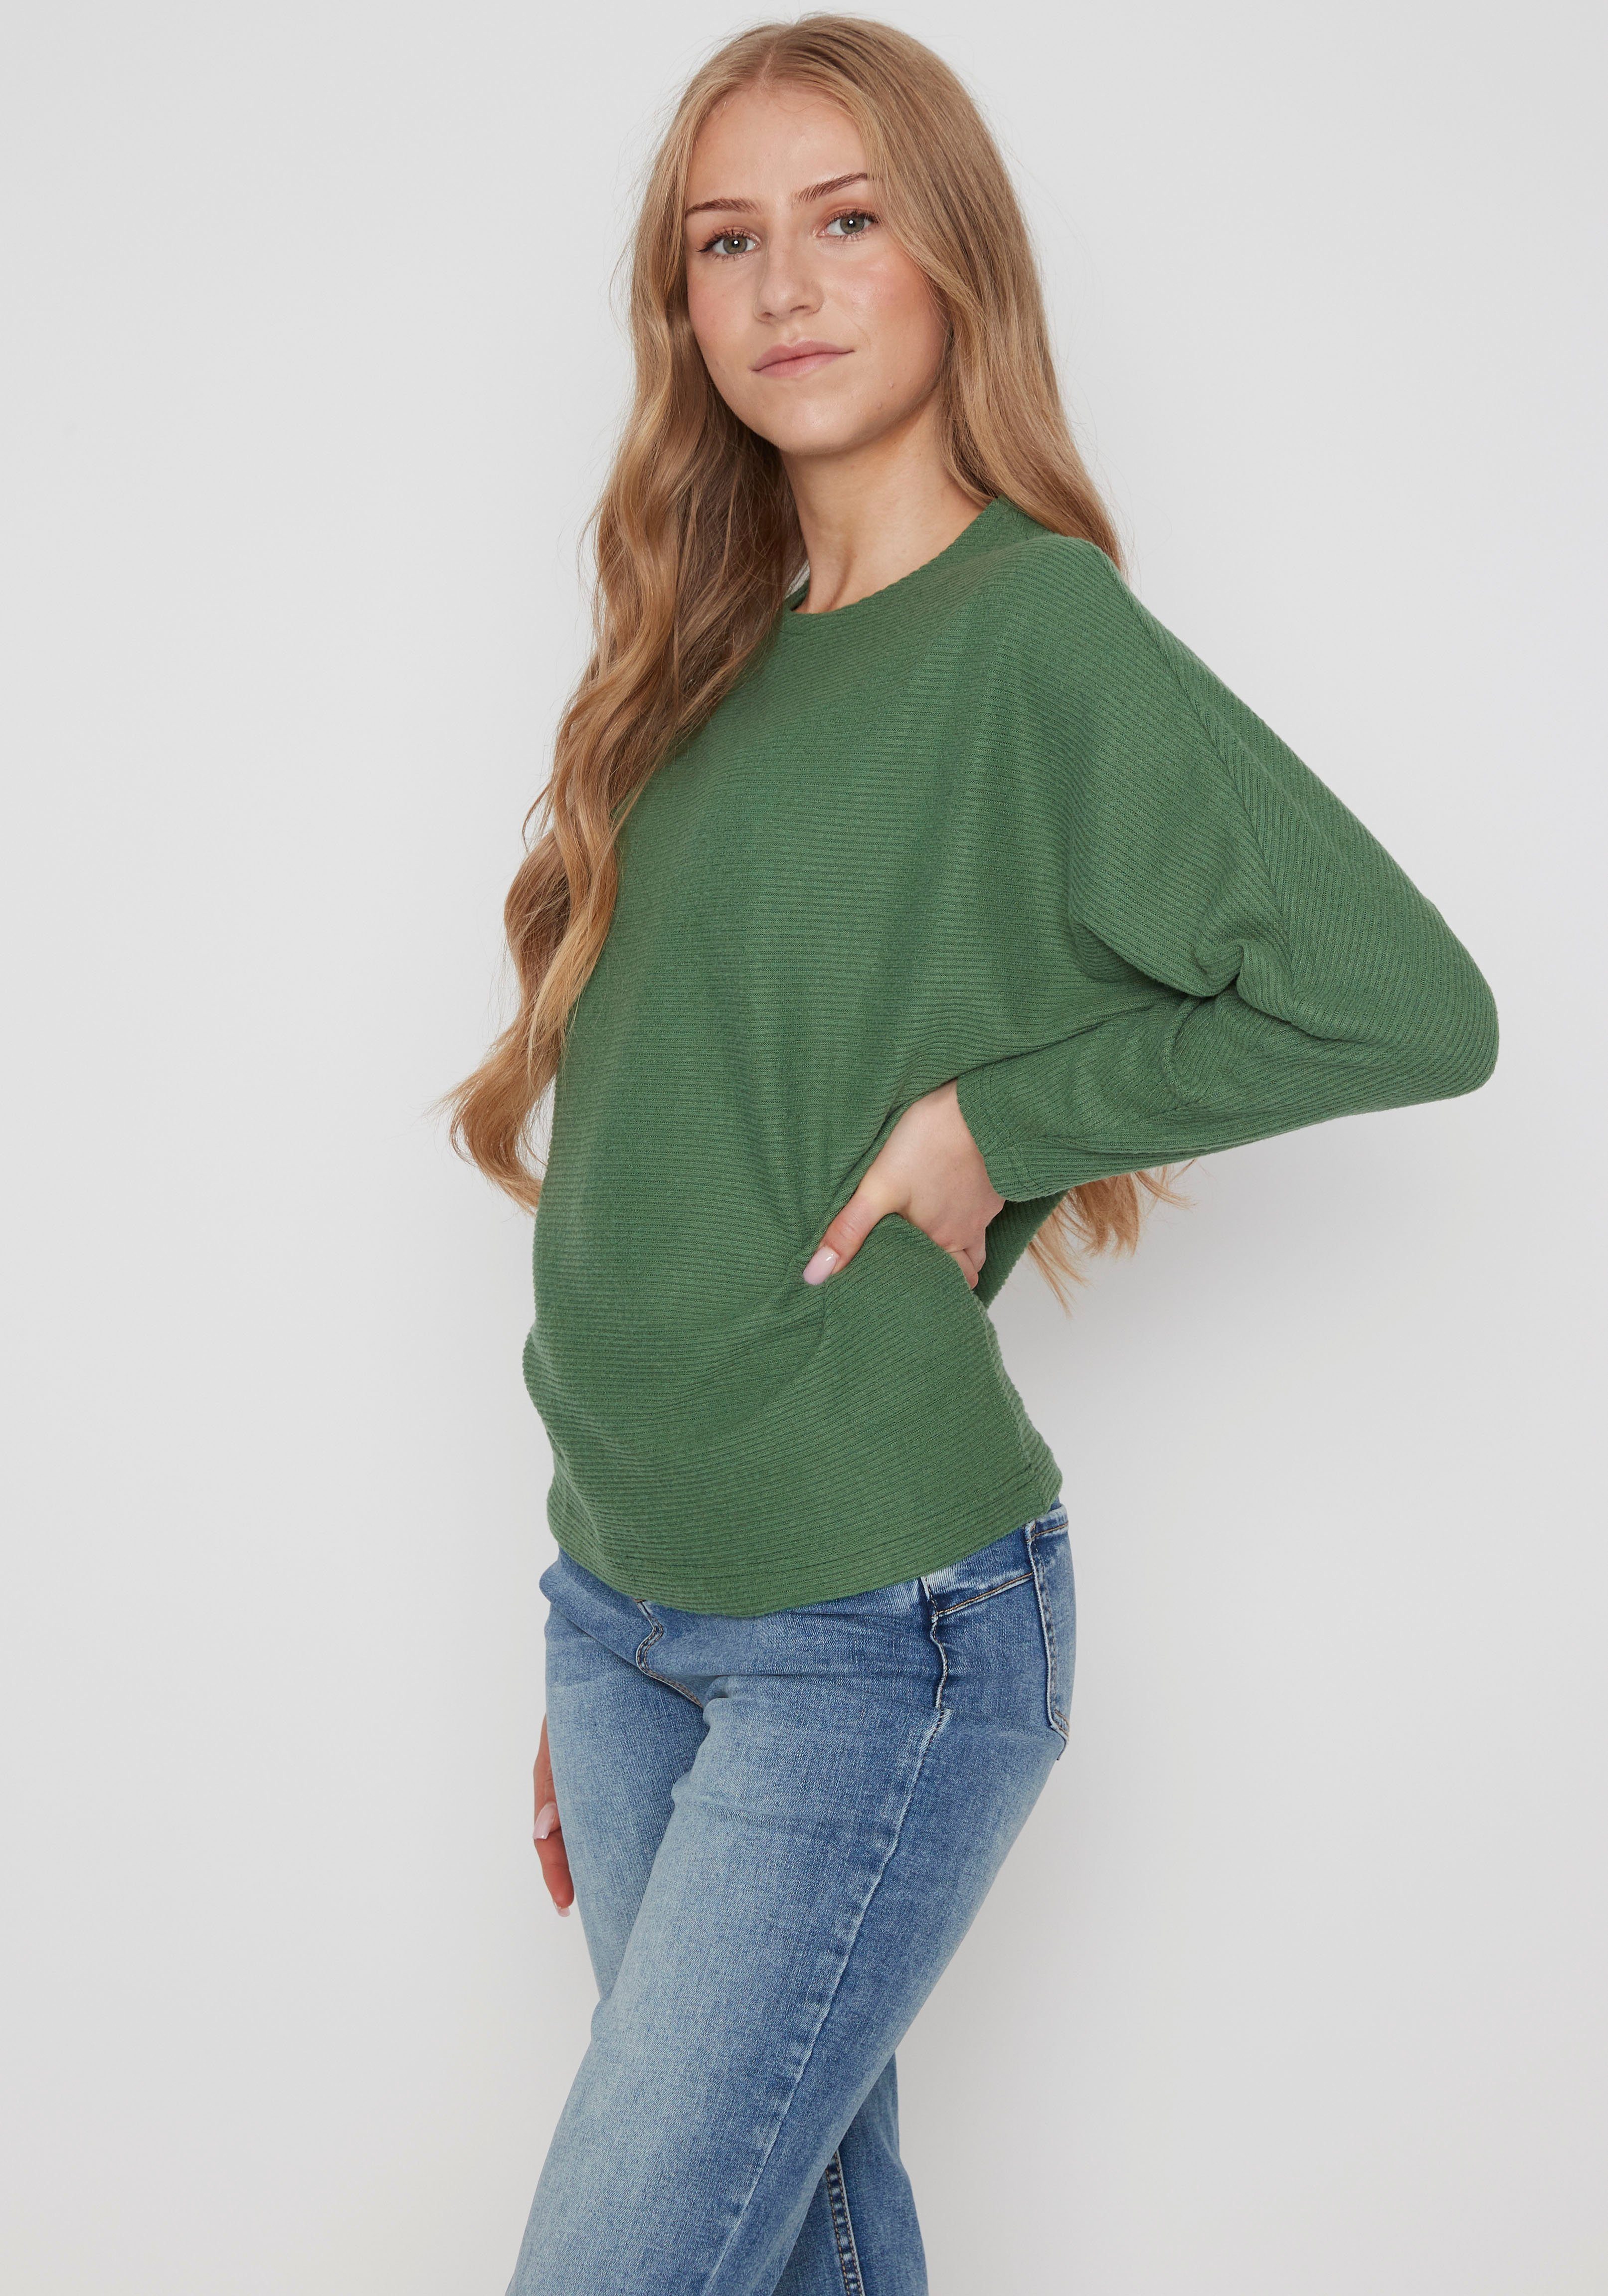 HaILY’S T-Shirt LS P marl TP Ma44ira green fern